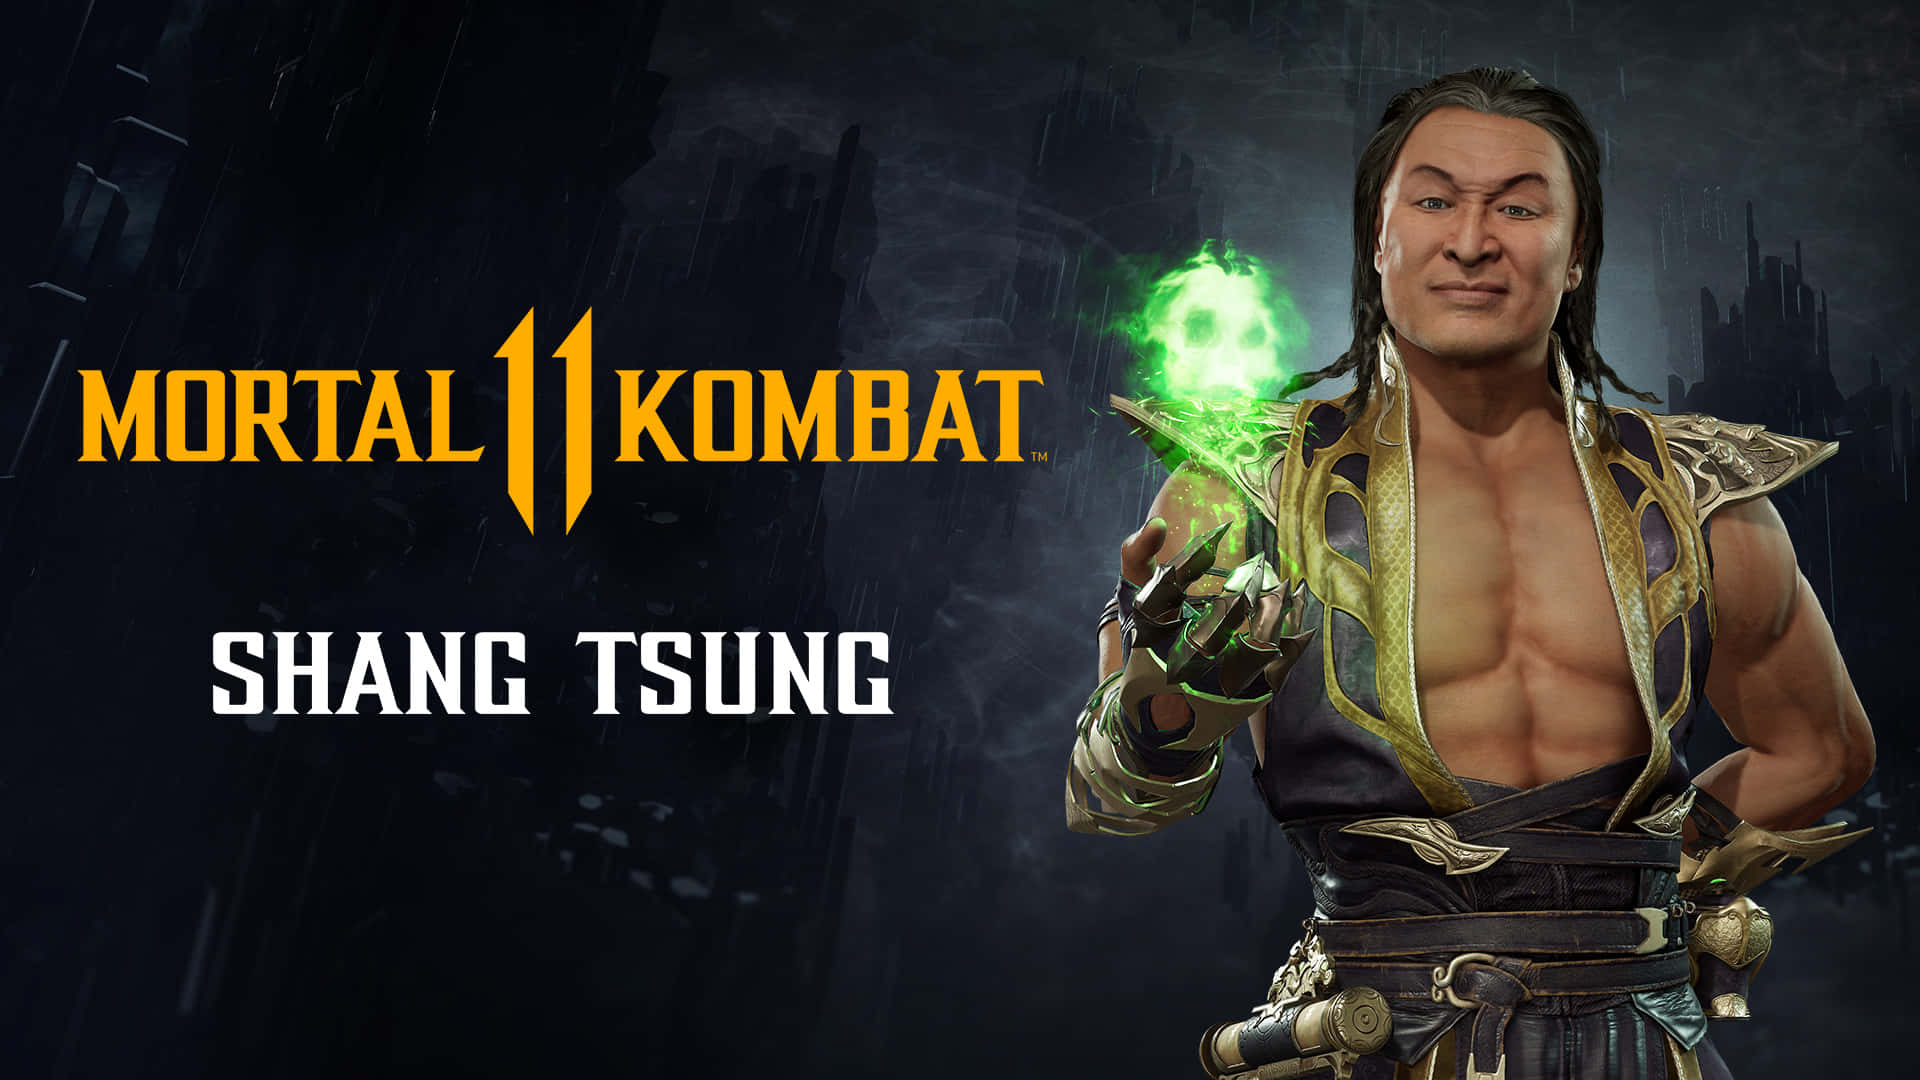 Shang Tsung, the Master of Souls, unleashes his power in Mortal Kombat Wallpaper